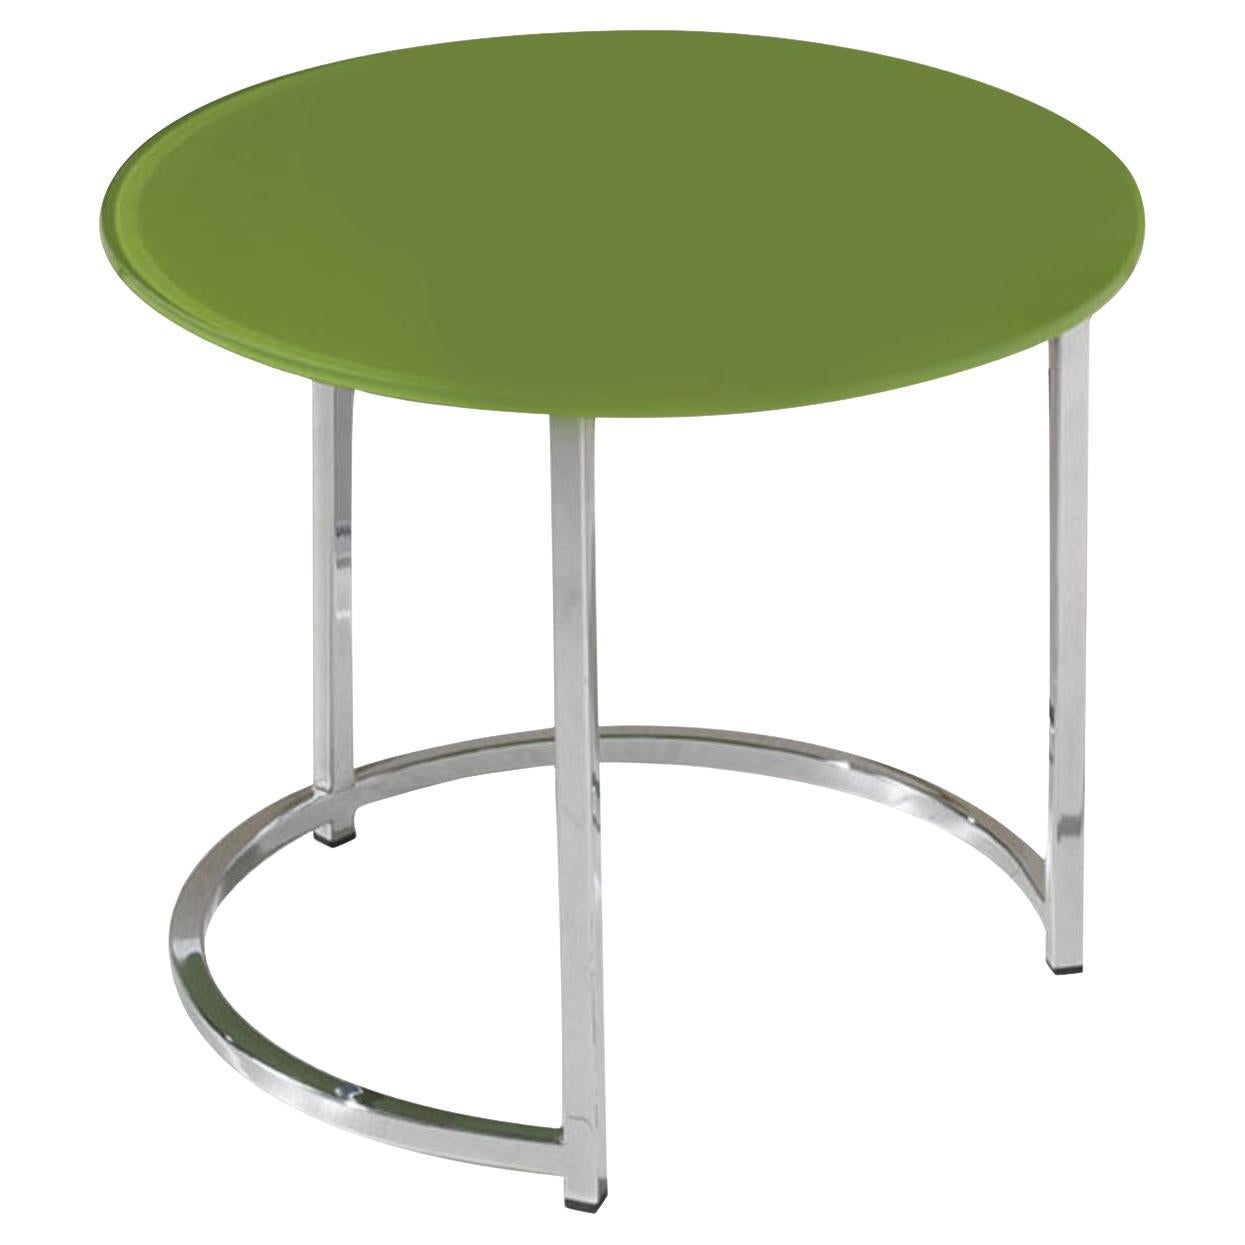 Cin Cin Green Glass Coffee Table For Sale